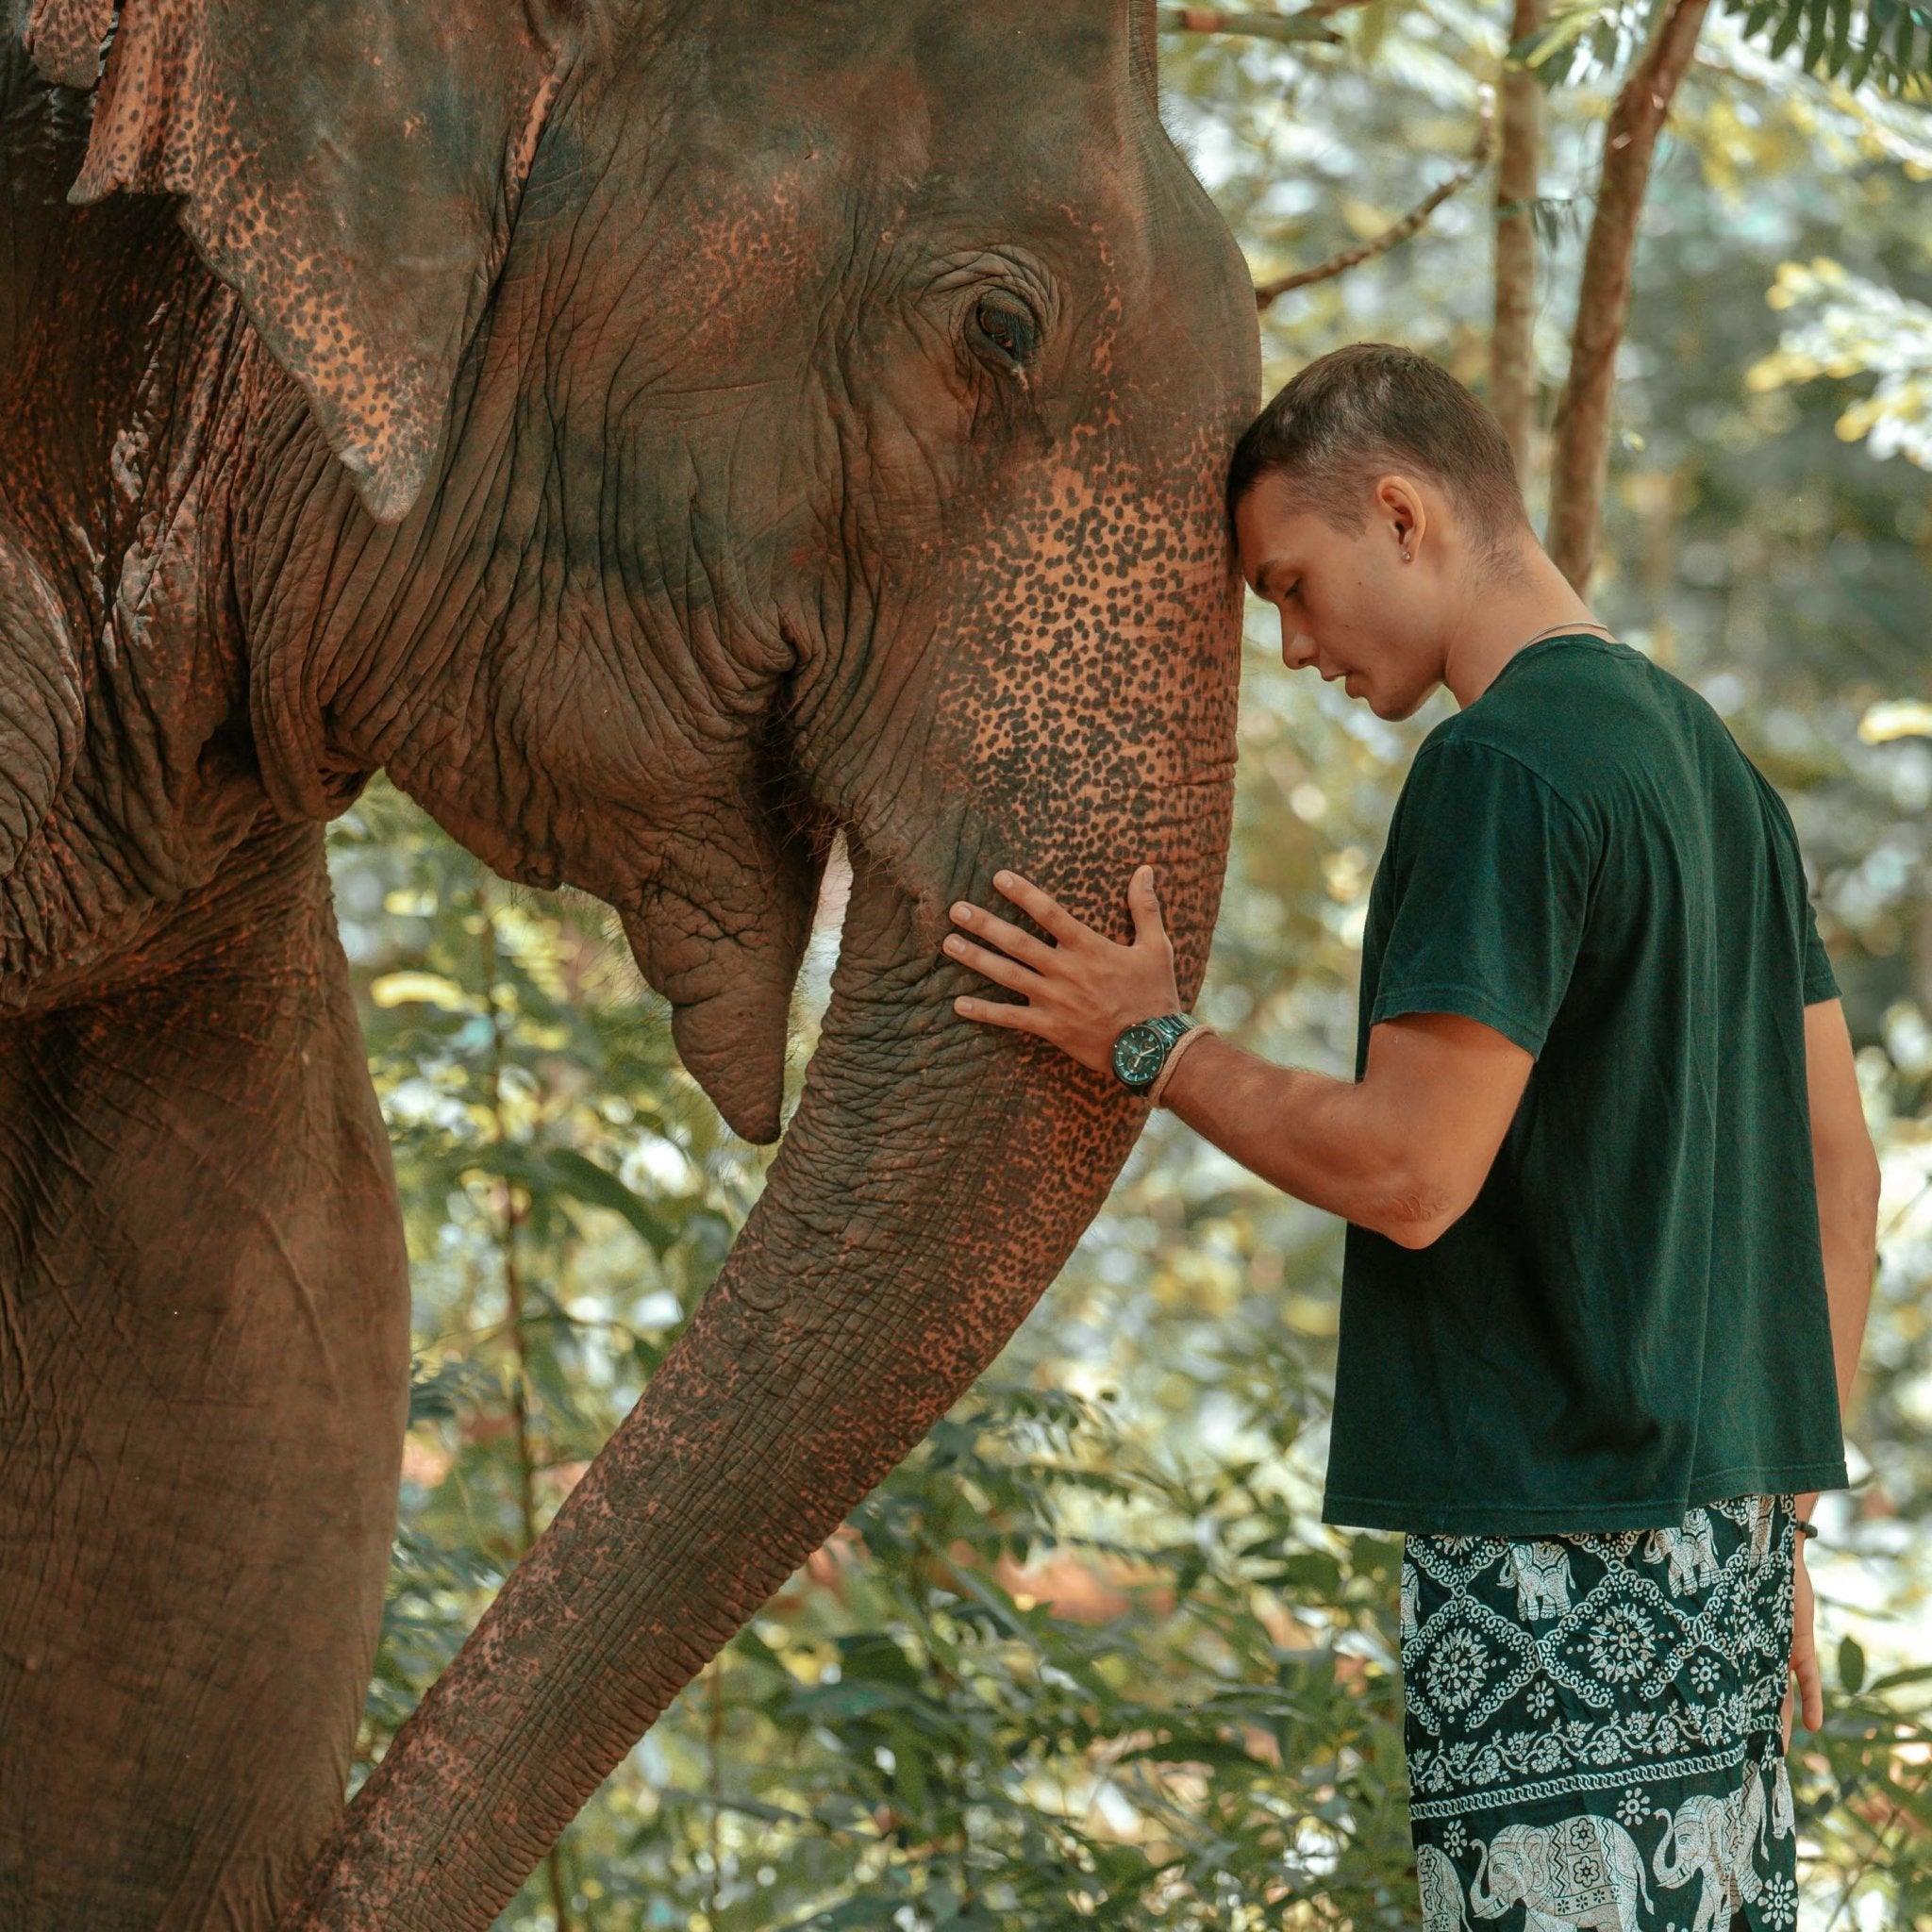 MANDALAY MEN'S SHORTS Elepanta Men's Shorts - Buy Today Elephant Pants Jewelry And Bohemian Clothes Handmade In Thailand Help To Save The Elephants FairTrade And Vegan